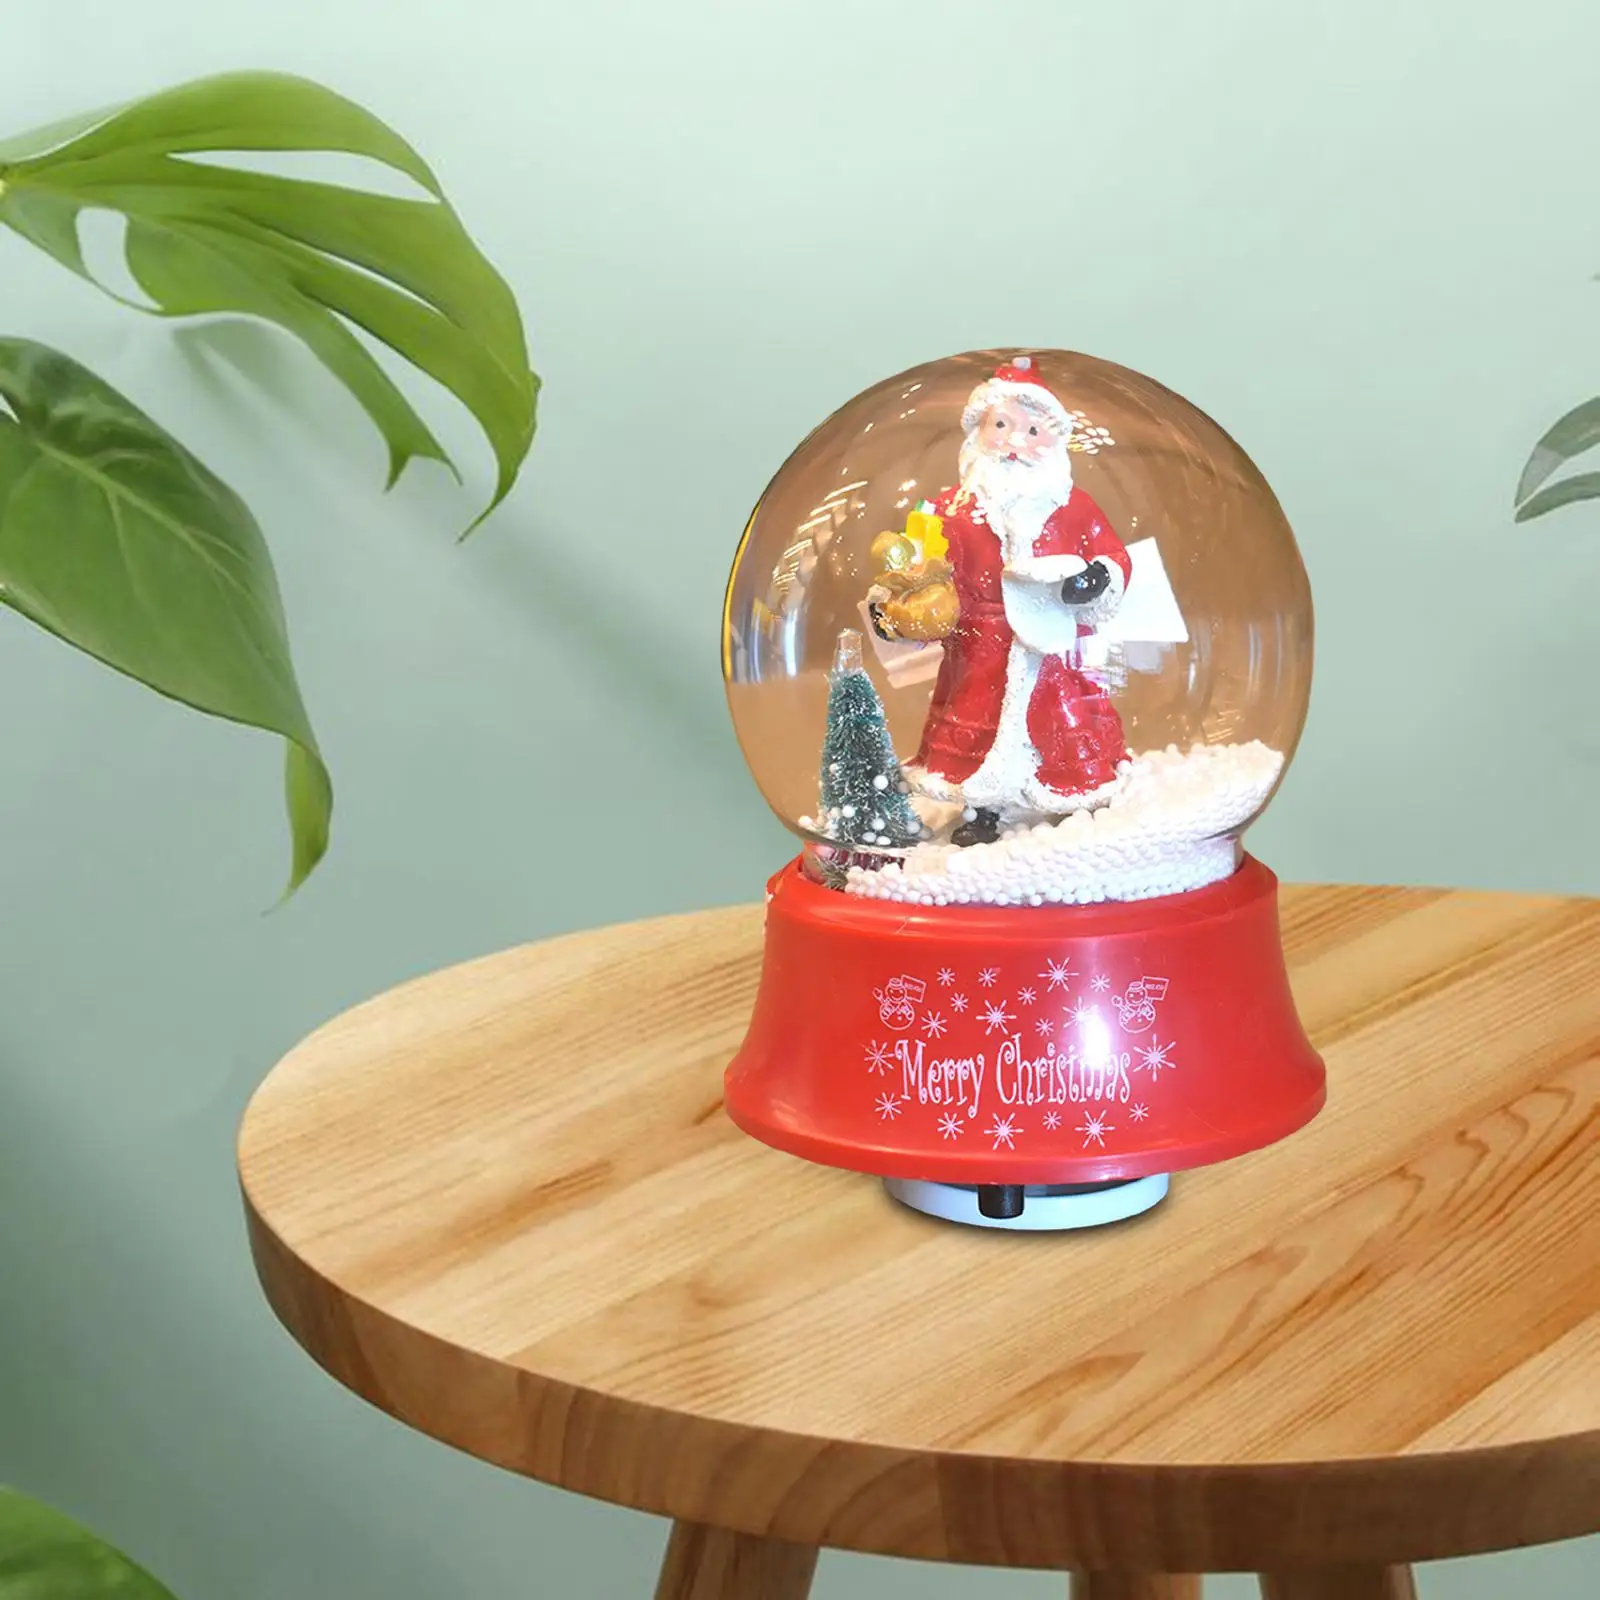 Christmas Snow  Figurine Christmas Decoration Music Box Ornaments with Music and Light Musical Snow  Rotating